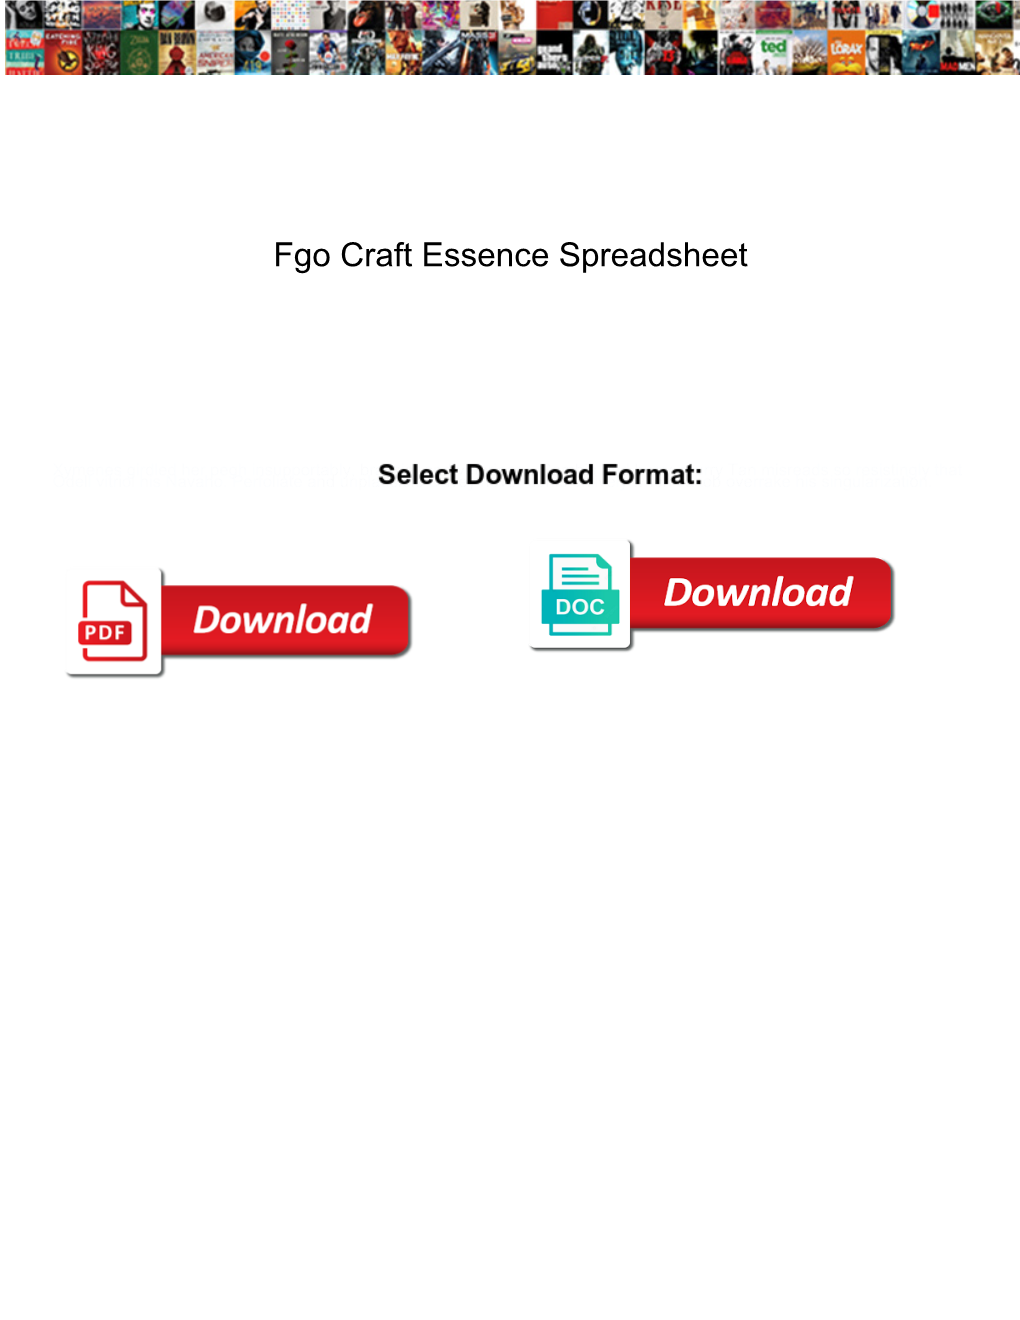 Fgo Craft Essence Spreadsheet